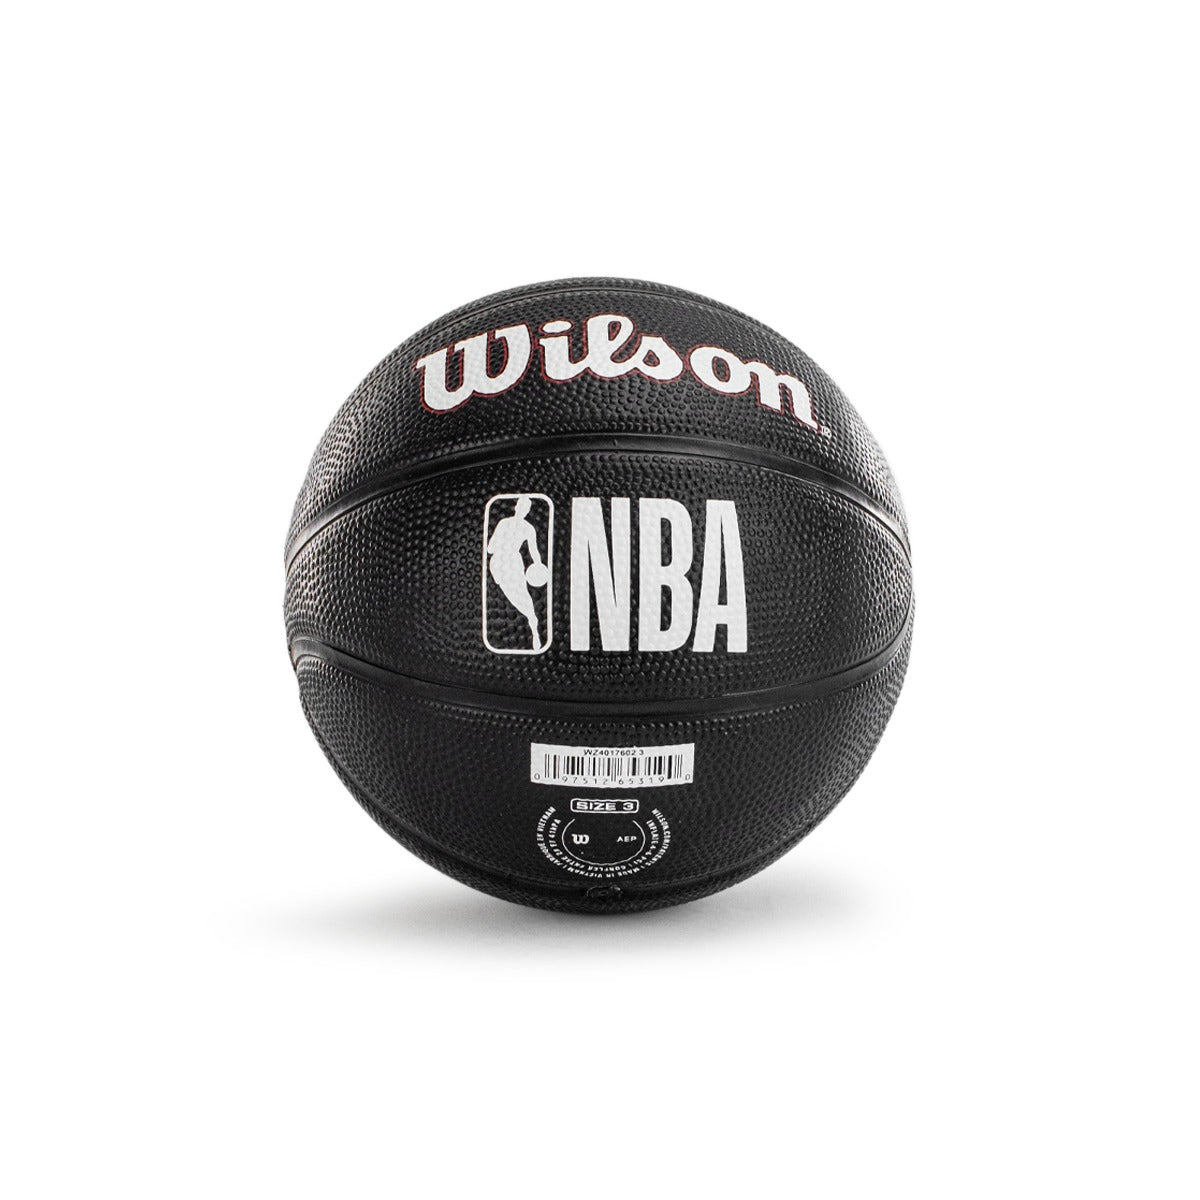 Wilson Chicago Bulls NBA Team Tribute Mini Basketball Größe 3 WZ4017602XB3-